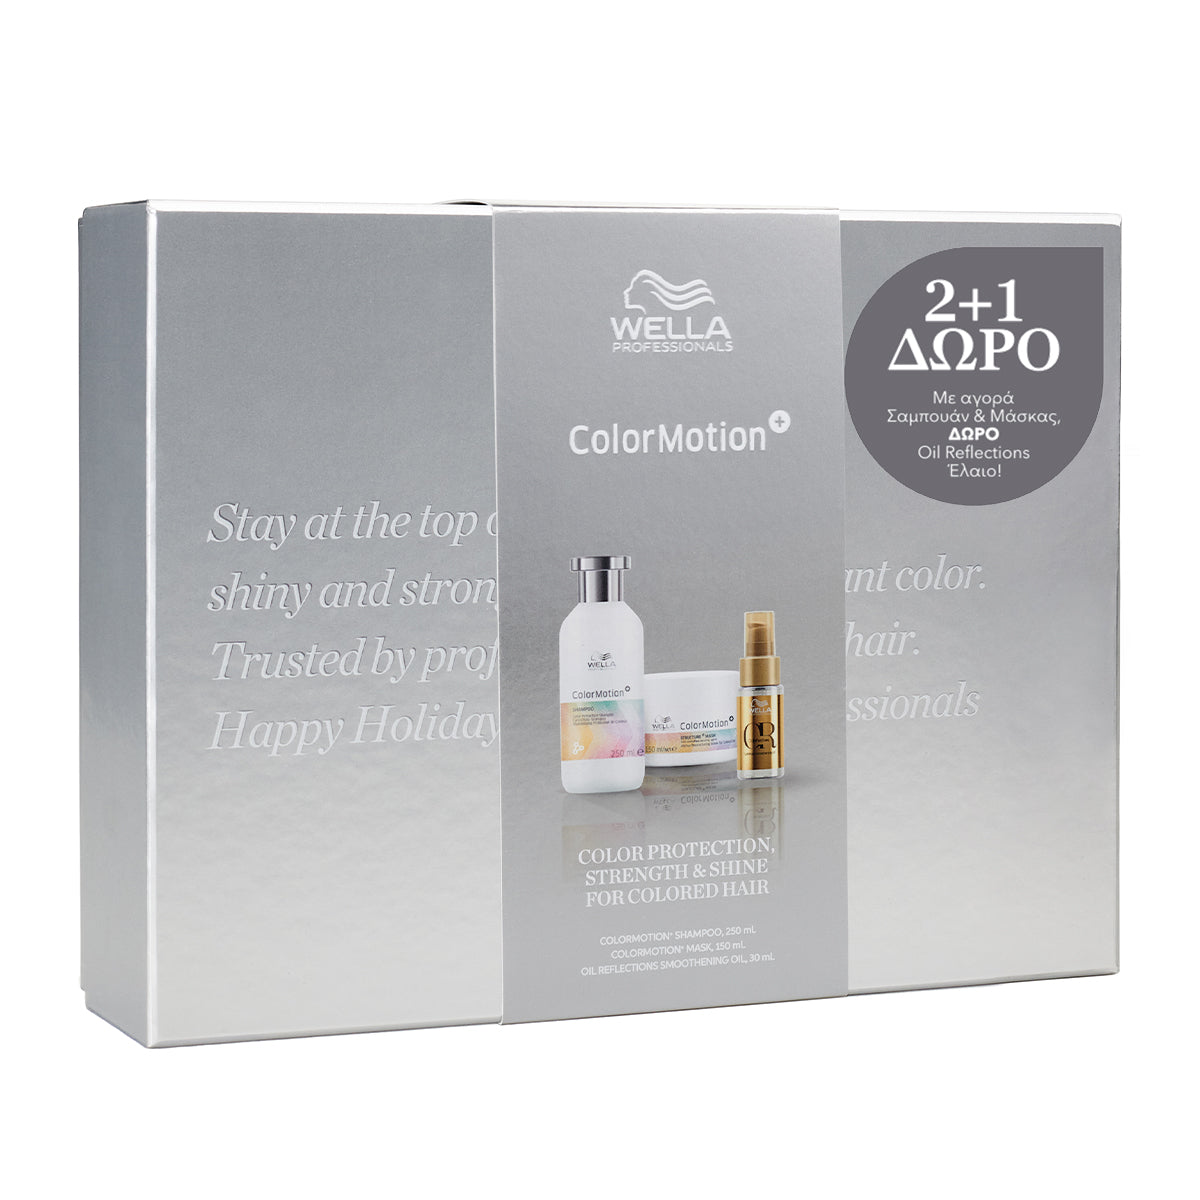 Wella Professionals ColorMotion Box (Shampoo 250ml,Mask 150ml, Oil Reflection 30ml